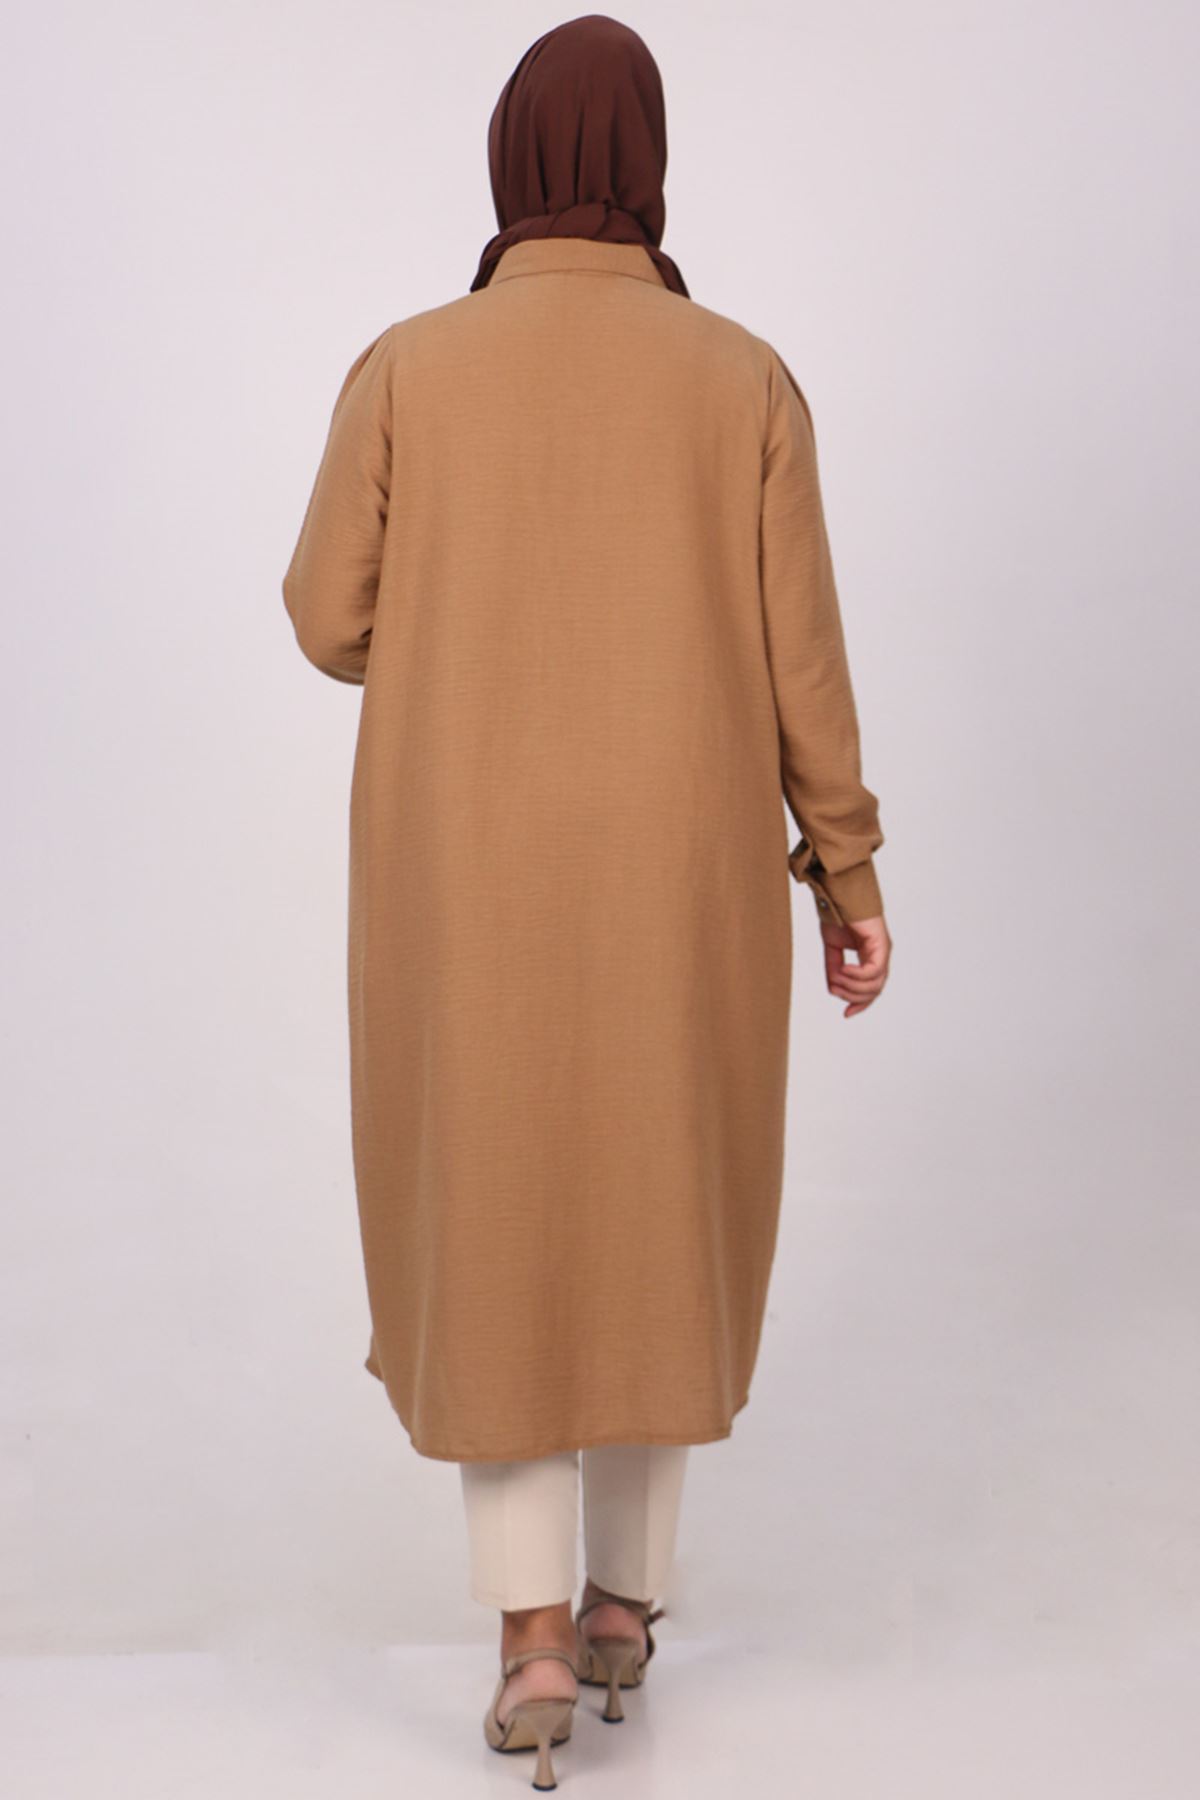 38099 Large Size Pocket Detailed Linen Airobin Shirt - Brown